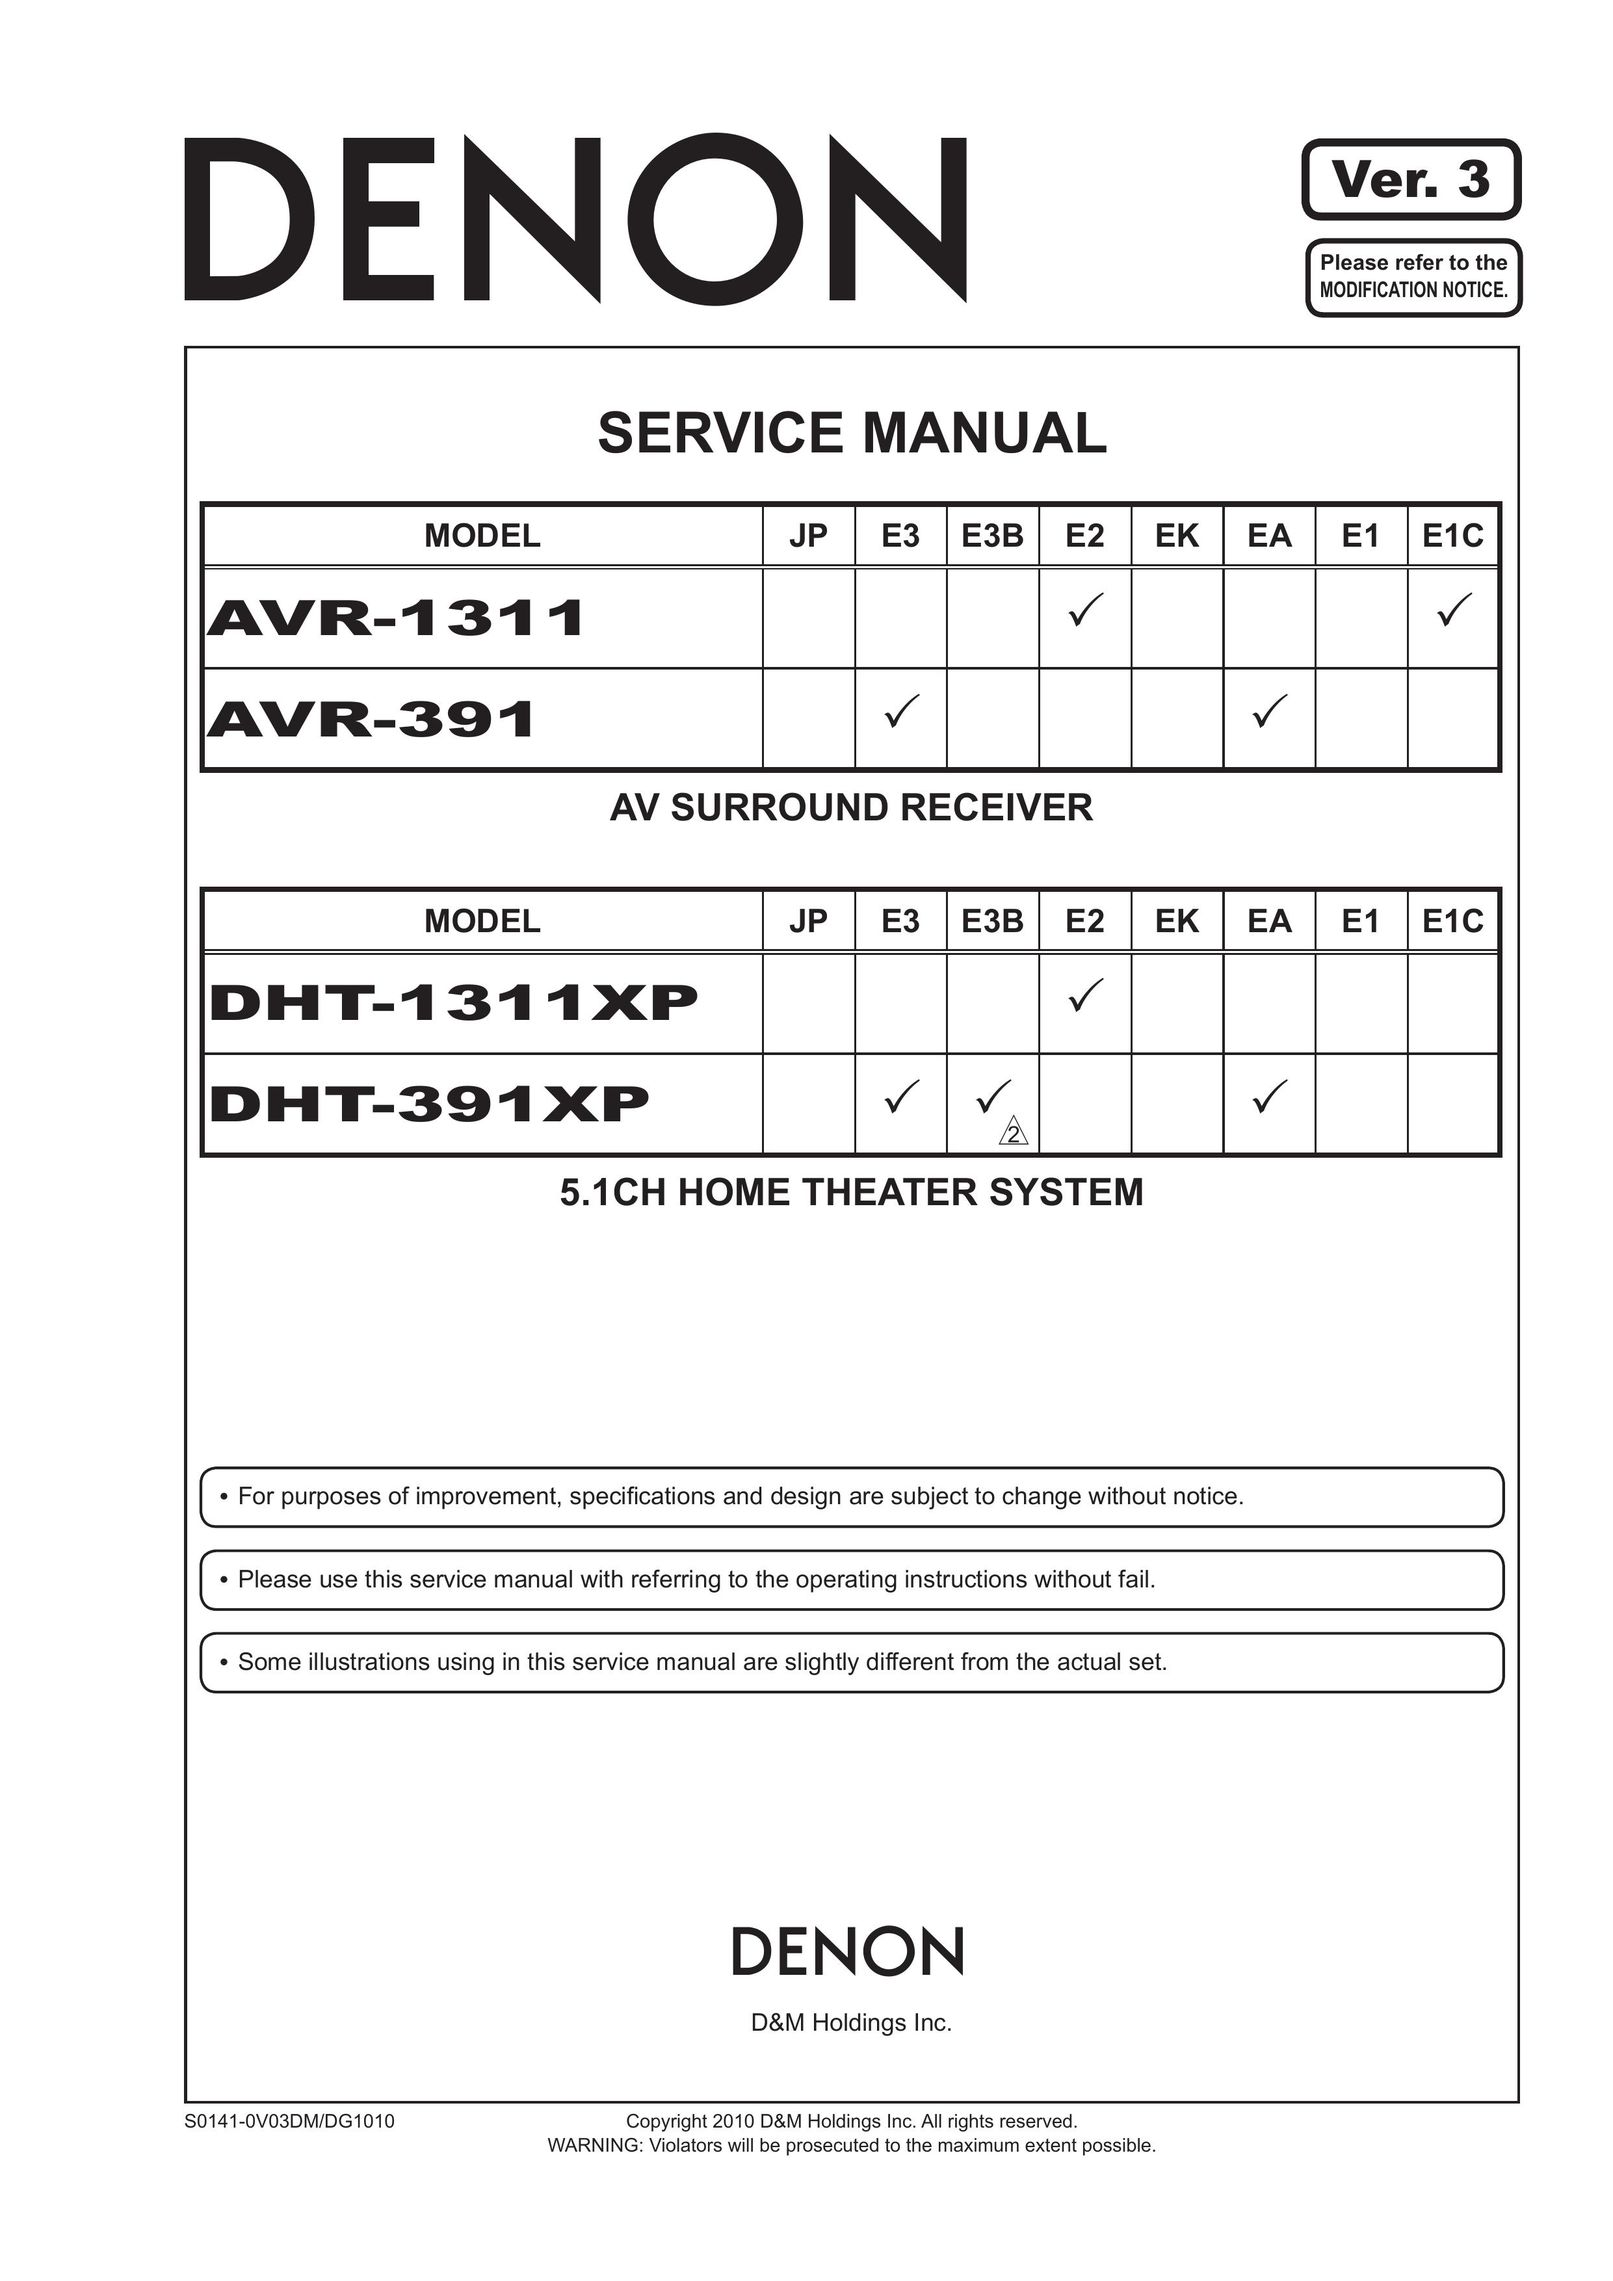 Denon AVR-391 DVD Player User Manual